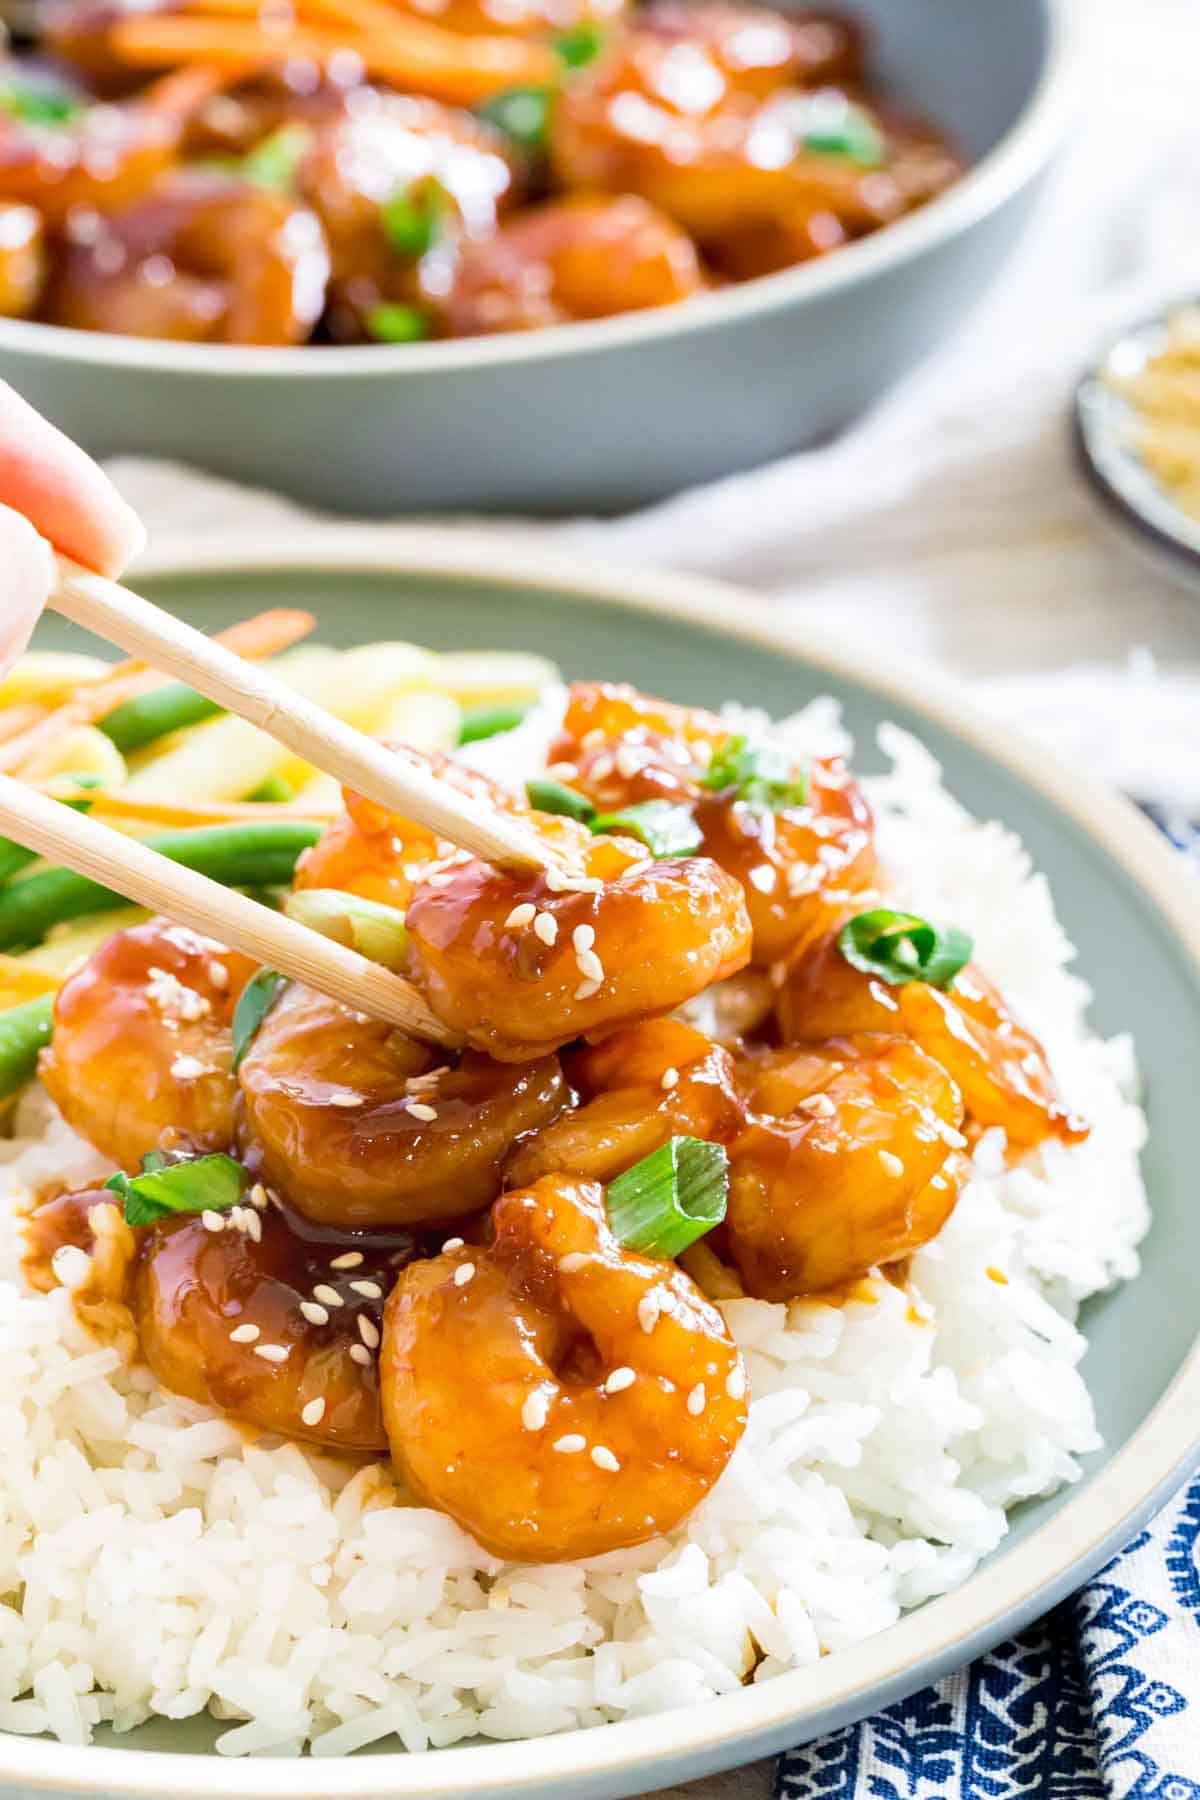 Chopsticks hold a piece of cooked teriyaki shrimp.